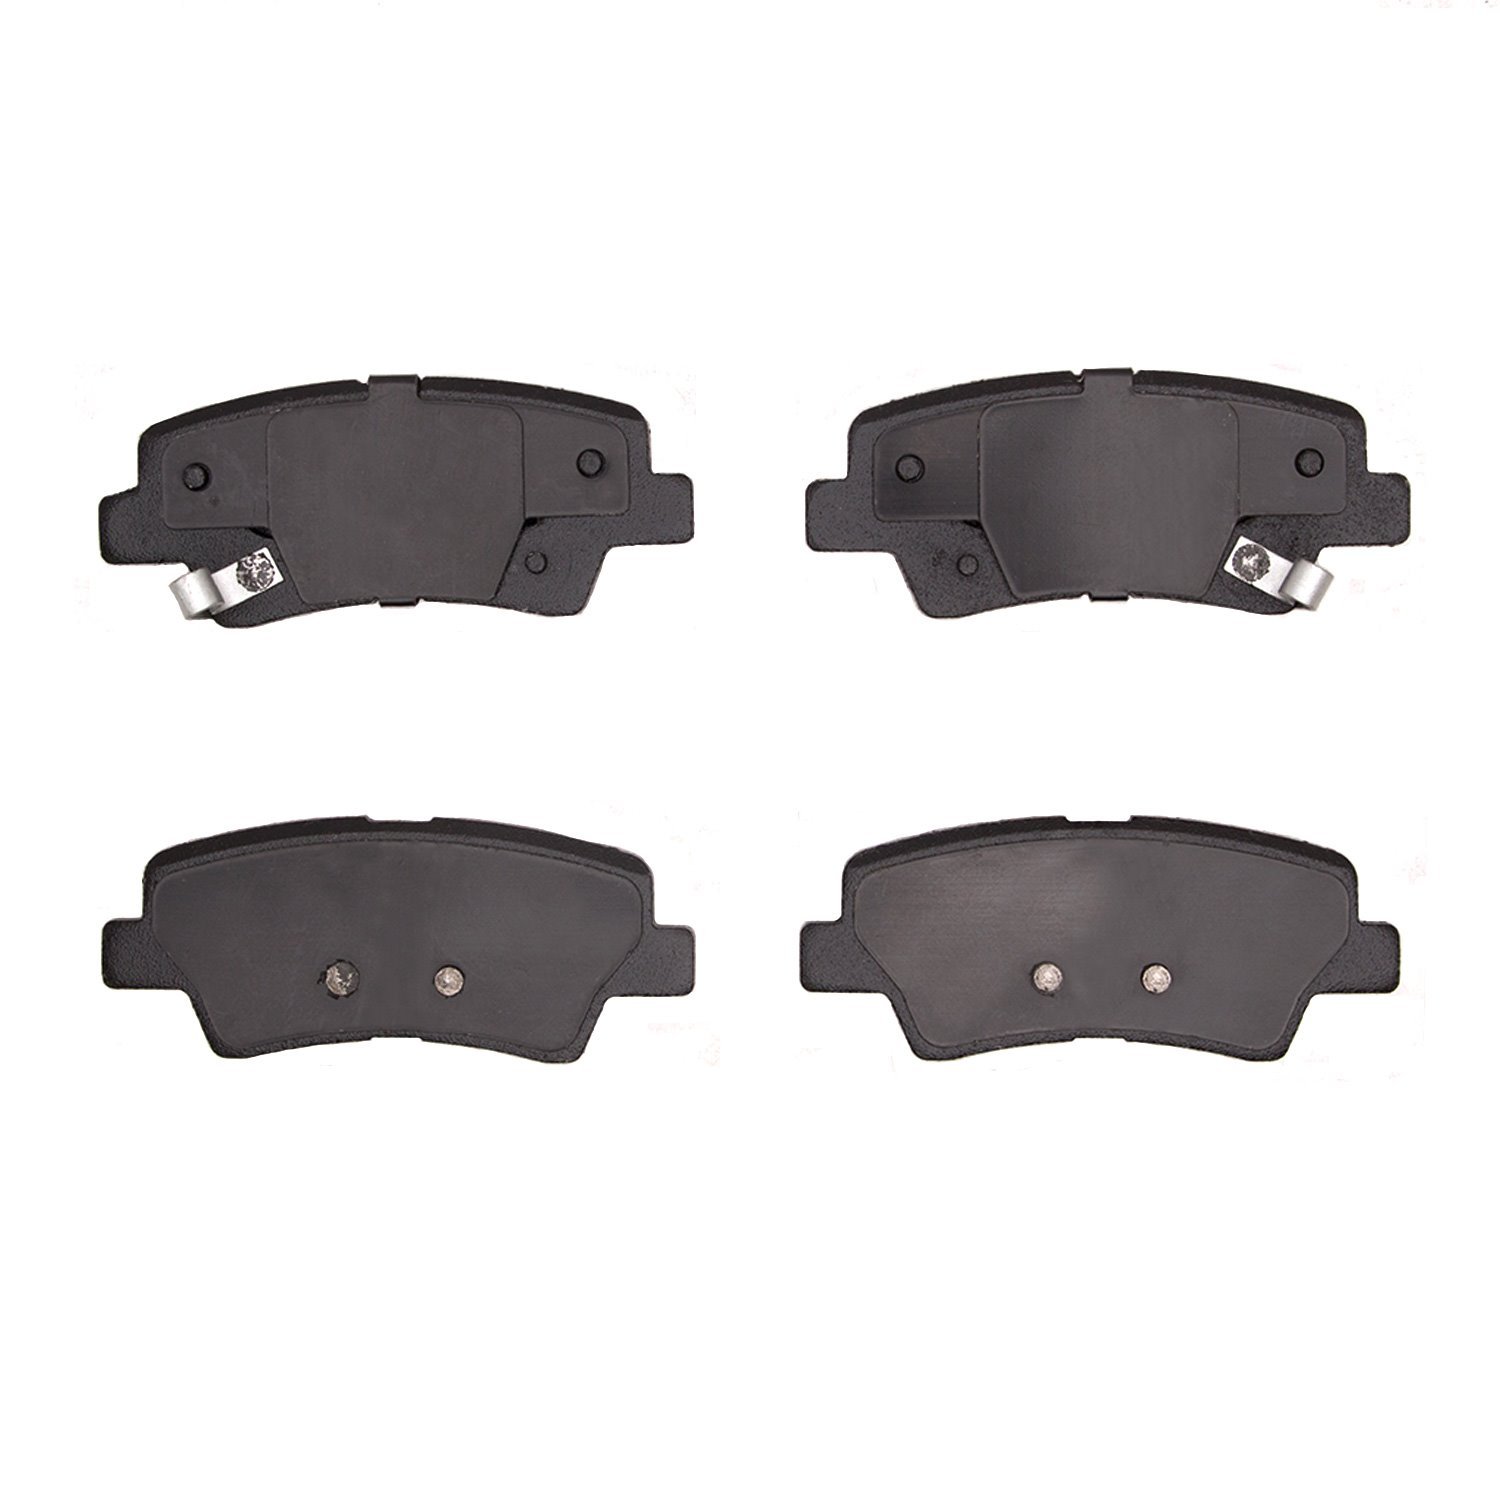 1551-1848-00 5000 Advanced Ceramic Brake Pads, Fits Select Kia/Hyundai/Genesis, Position: Rear